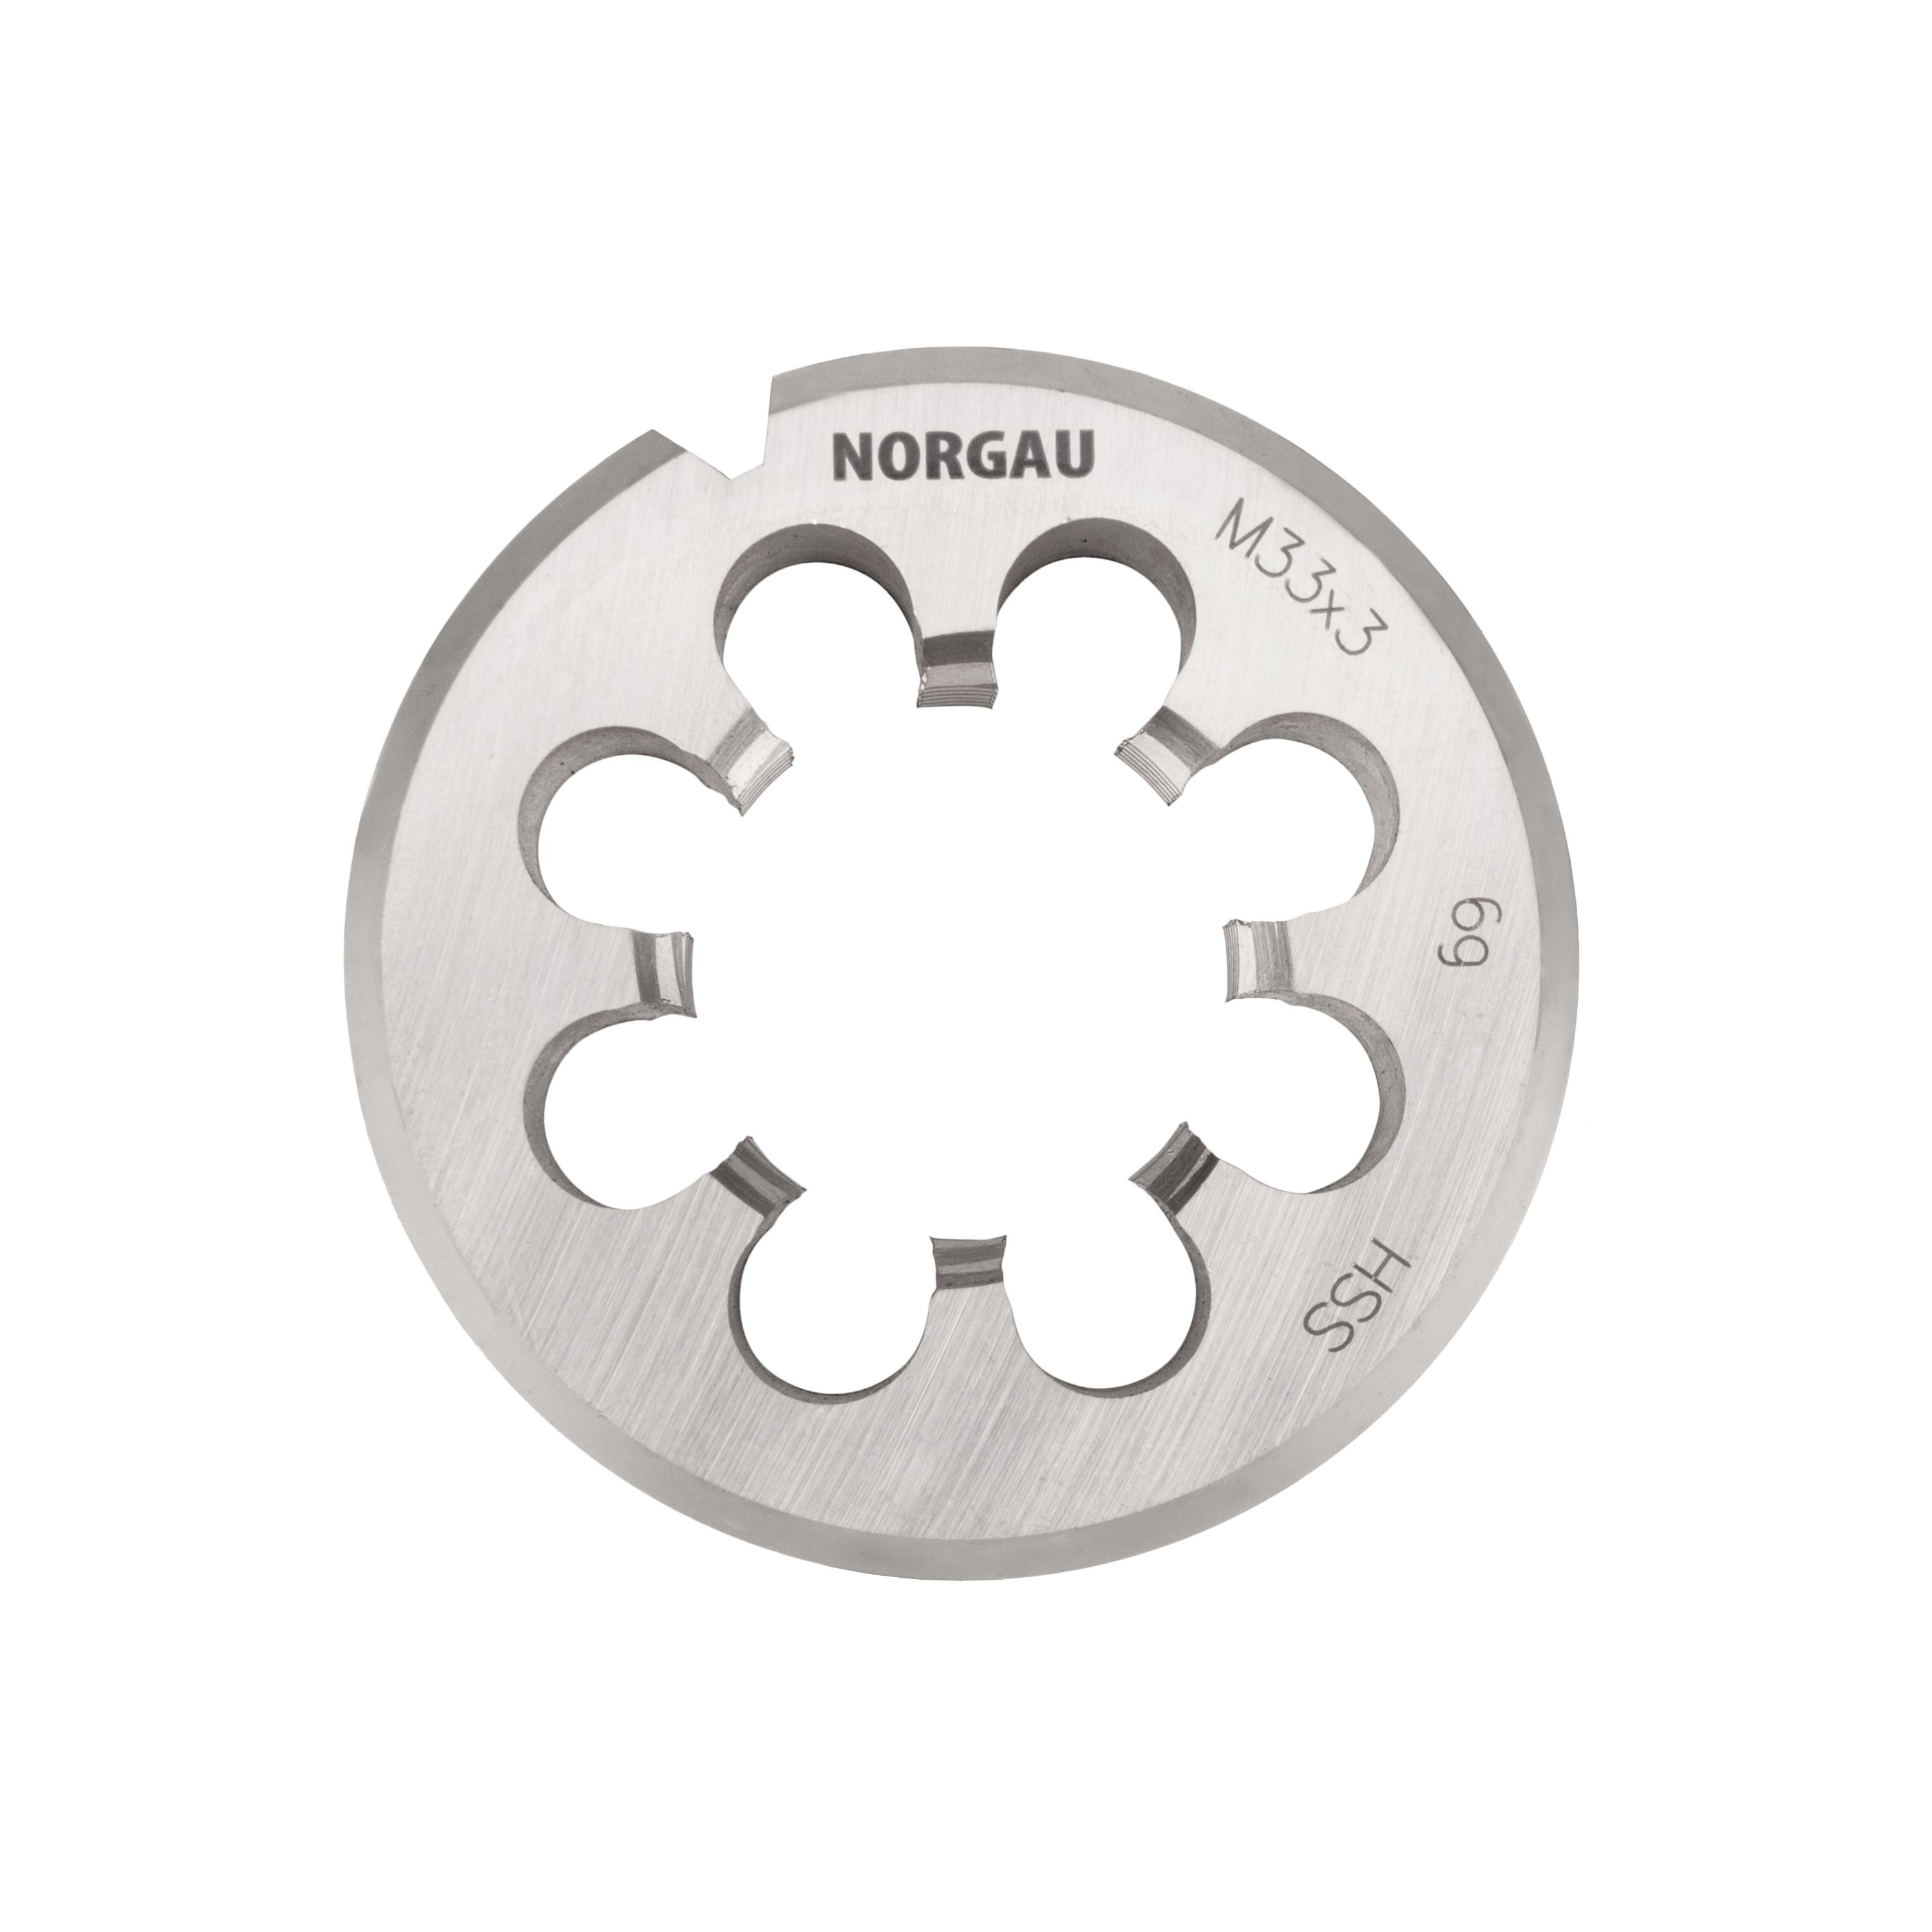 Плашка NORGAU Industrial MF33x3х65 мм, метрическая, с мелким шагом, по DIN223, HSS гирлянда belt light 20м с шагом 25см патрон е27 провод пвх ip54